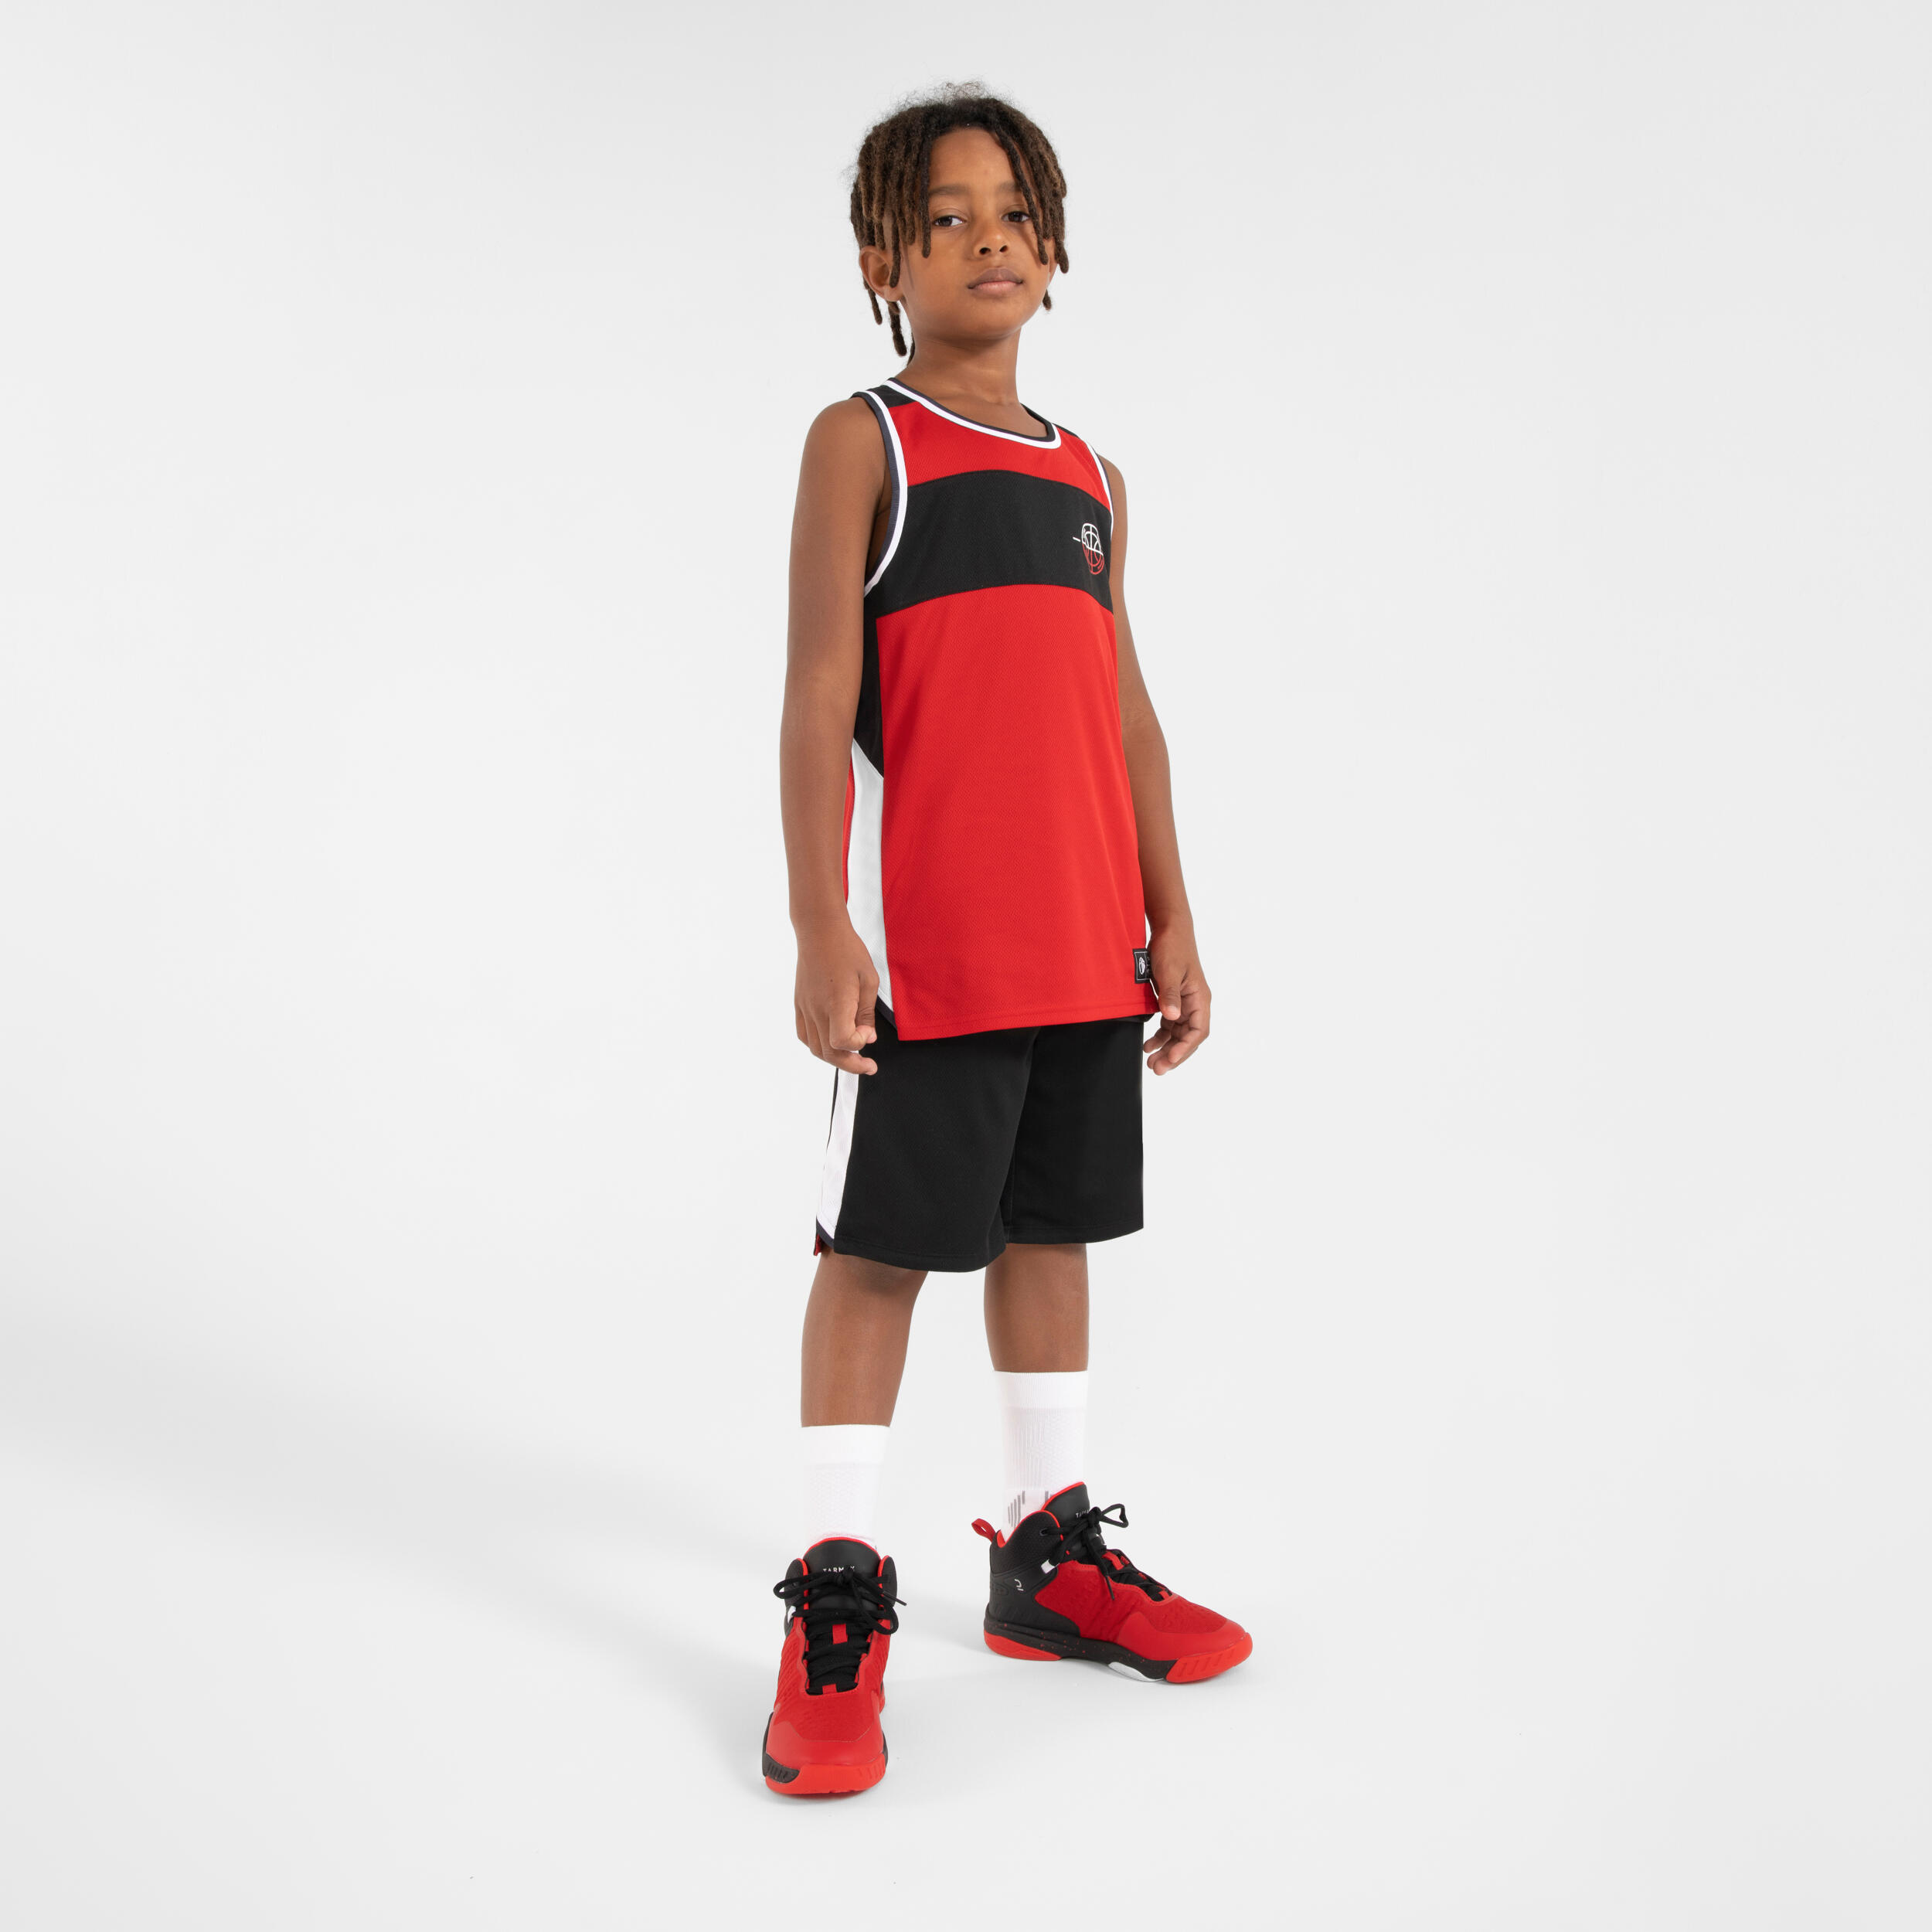 Kids' Reversible Basketball Shorts SH500R - Black/Red 4/11